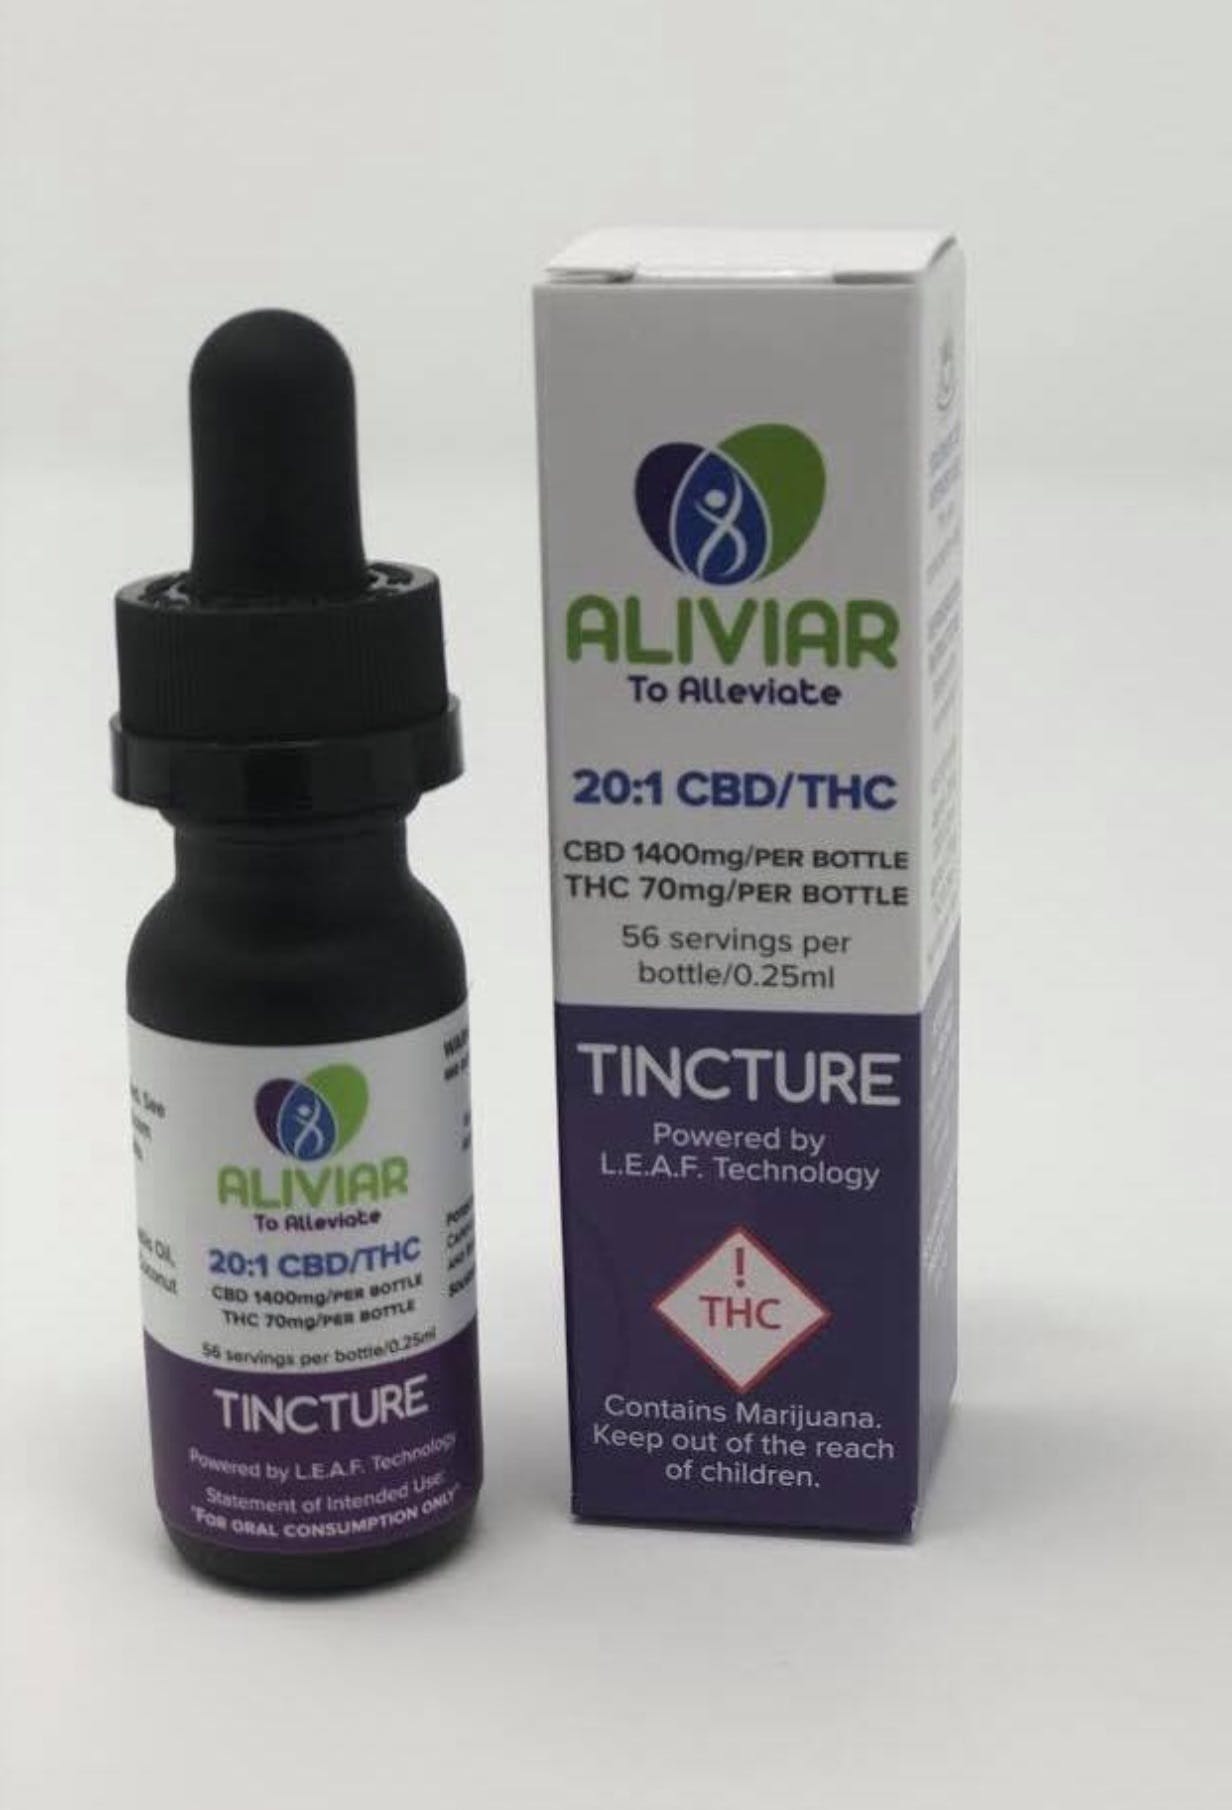 tincture-aliviar-to-alleviate-201-cbd-thc-tincture